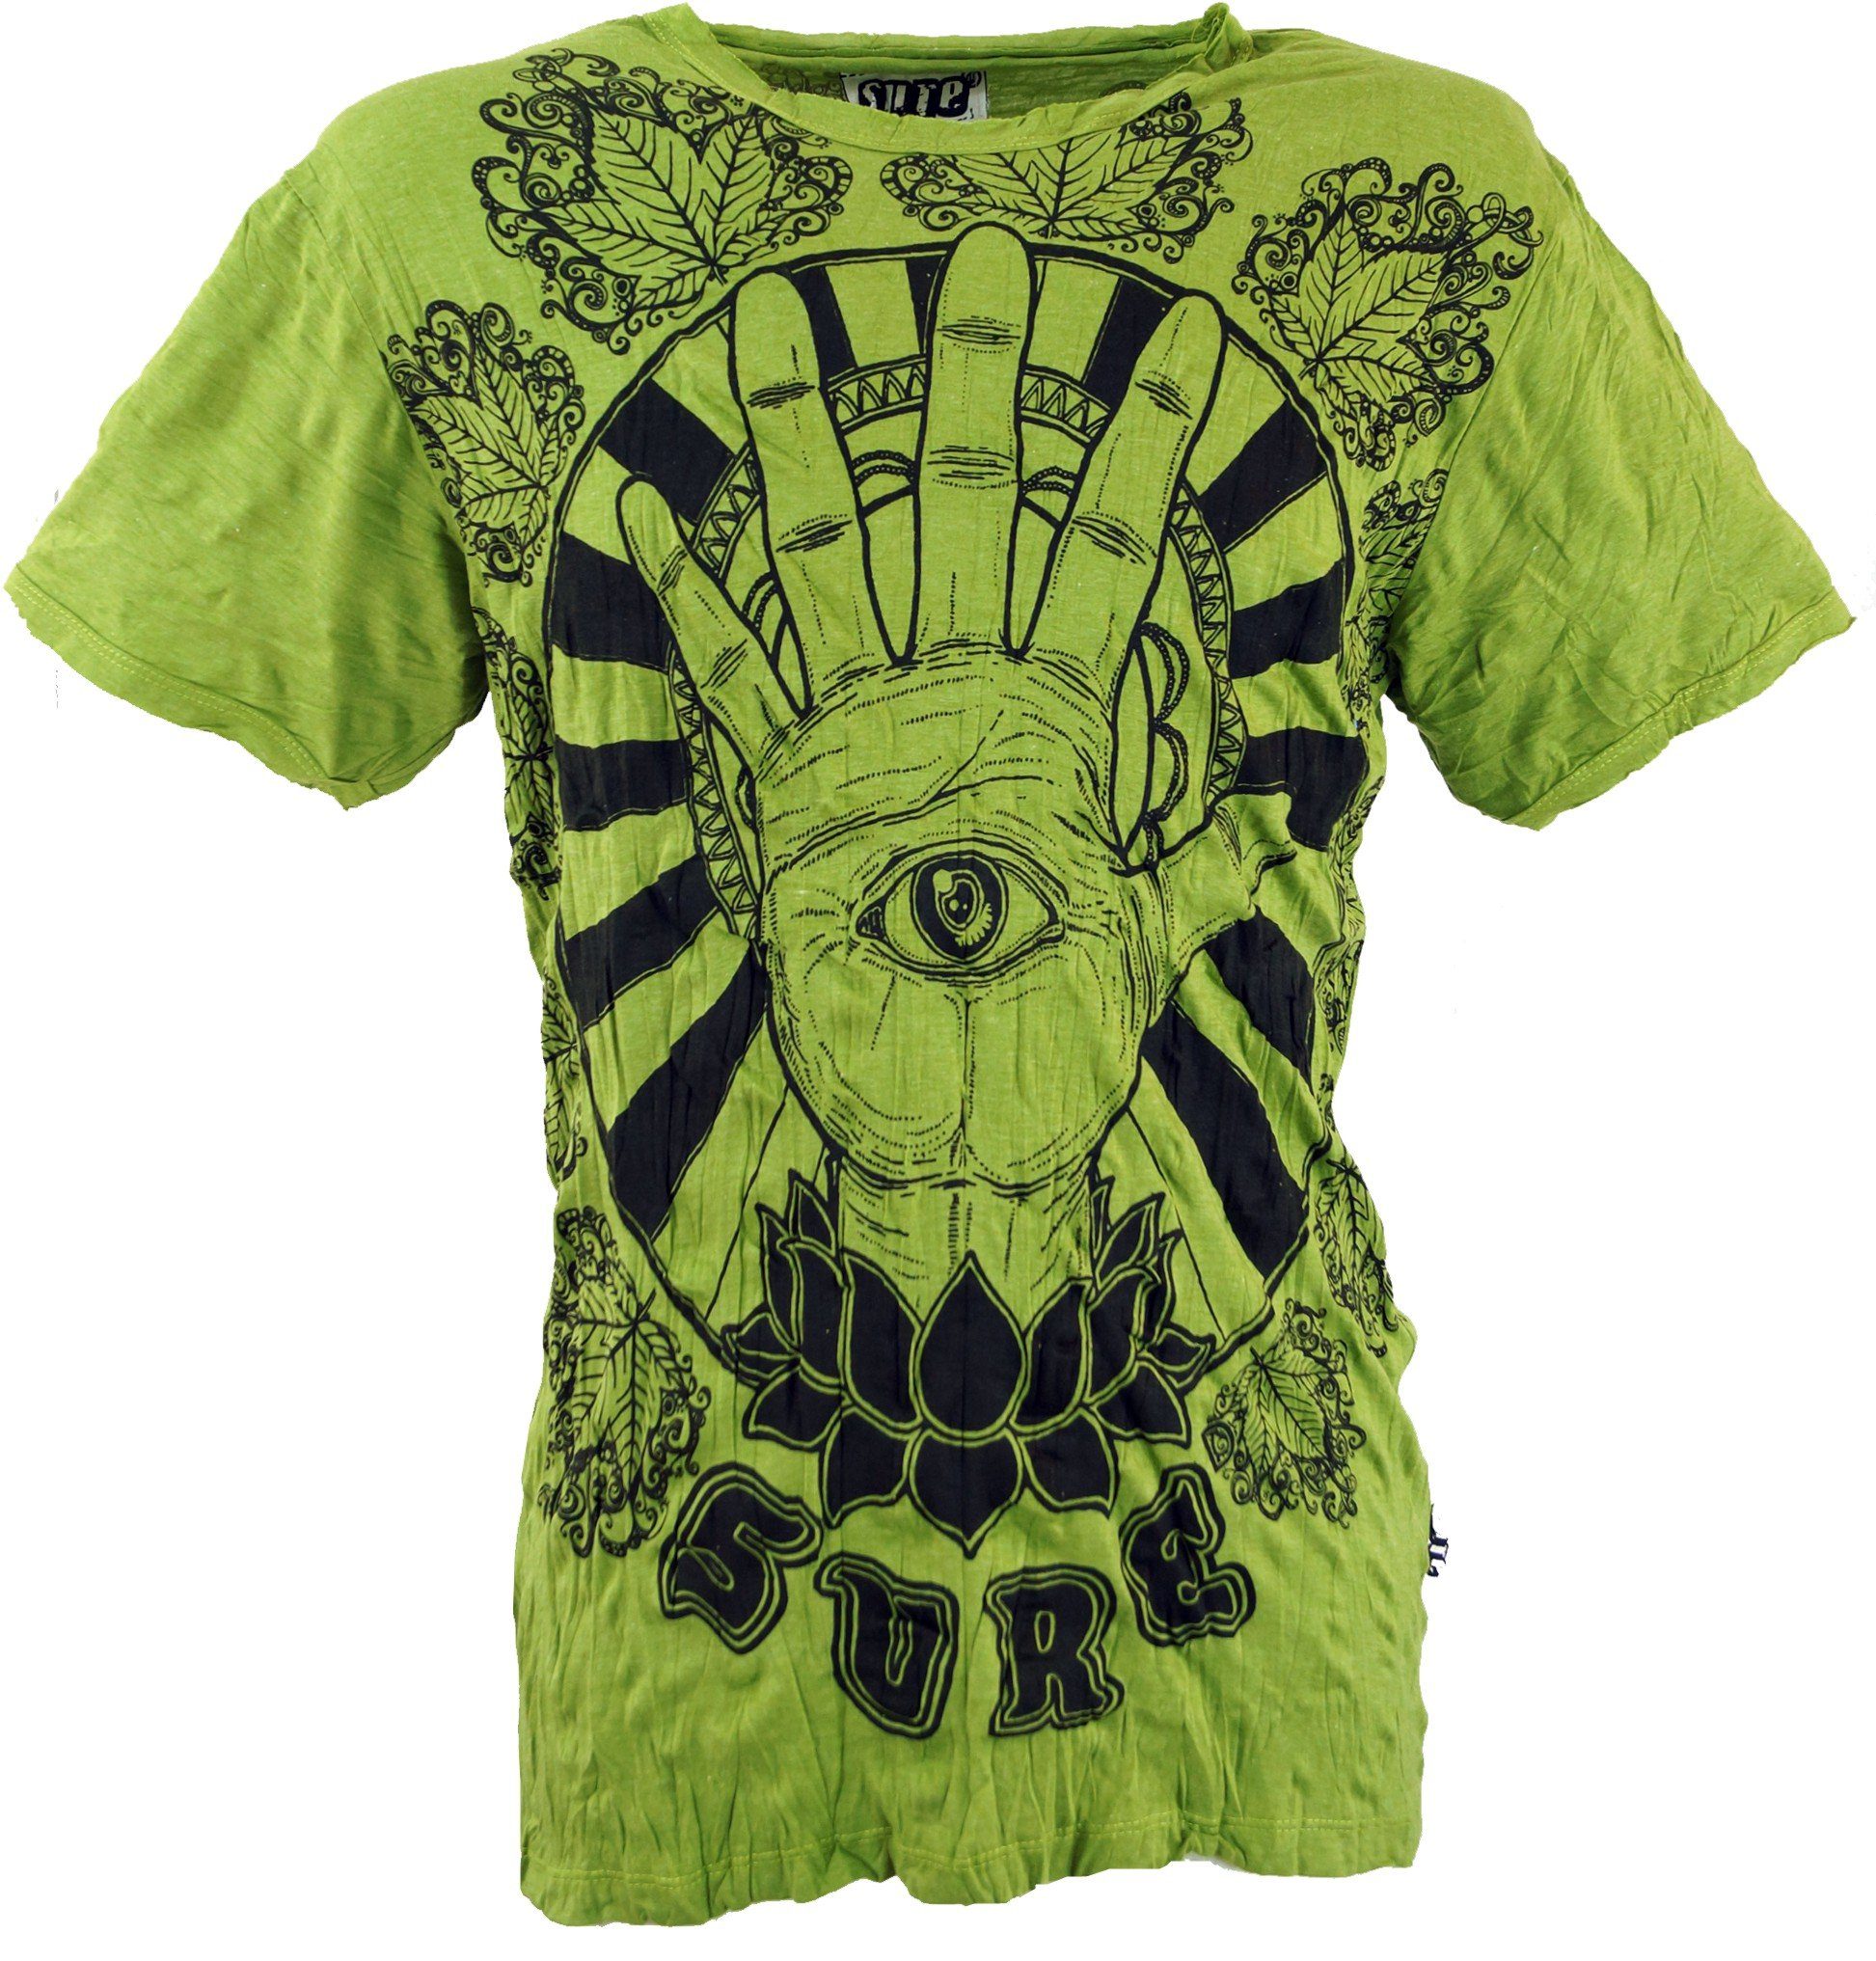 Guru-Shop T-Shirt Sure T-Shirt Magic lemon Eye Festival, alternative - Bekleidung Style, Goa